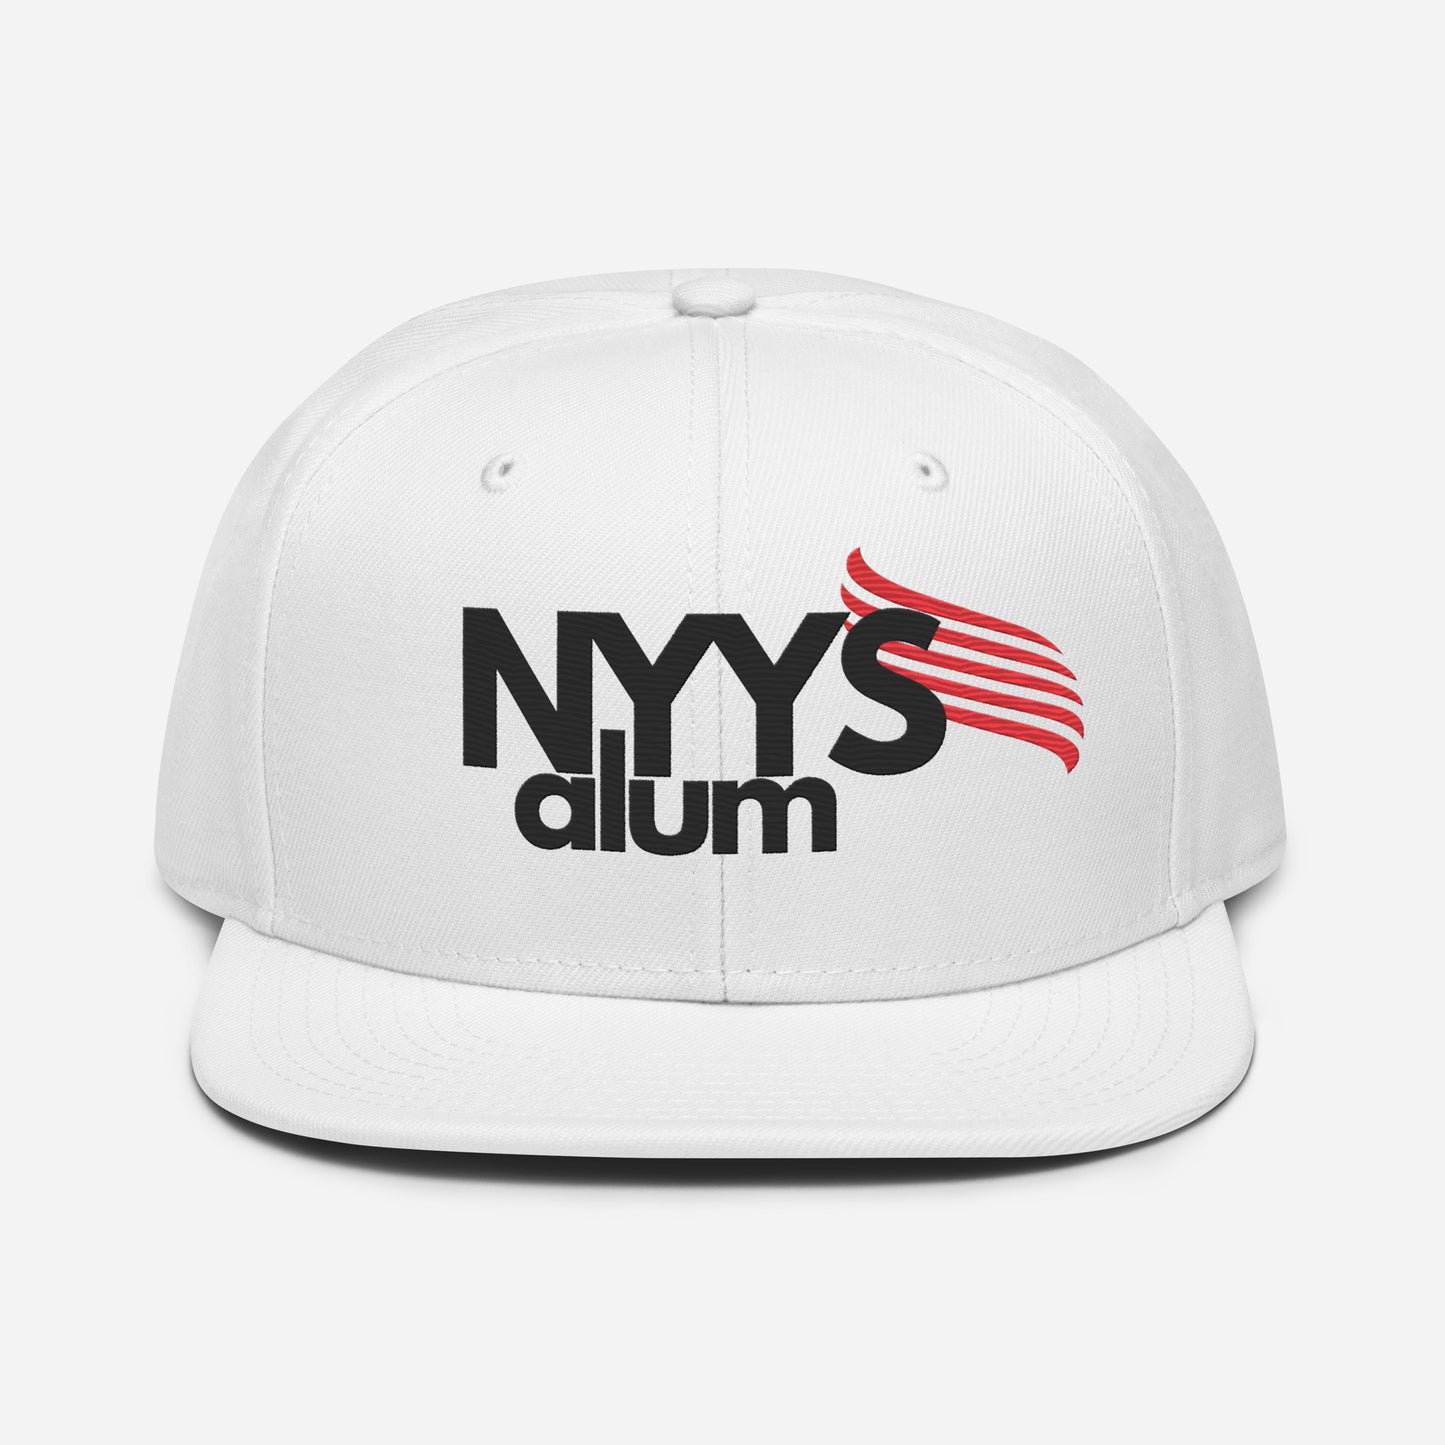 NYYS Alum Snapback Hat